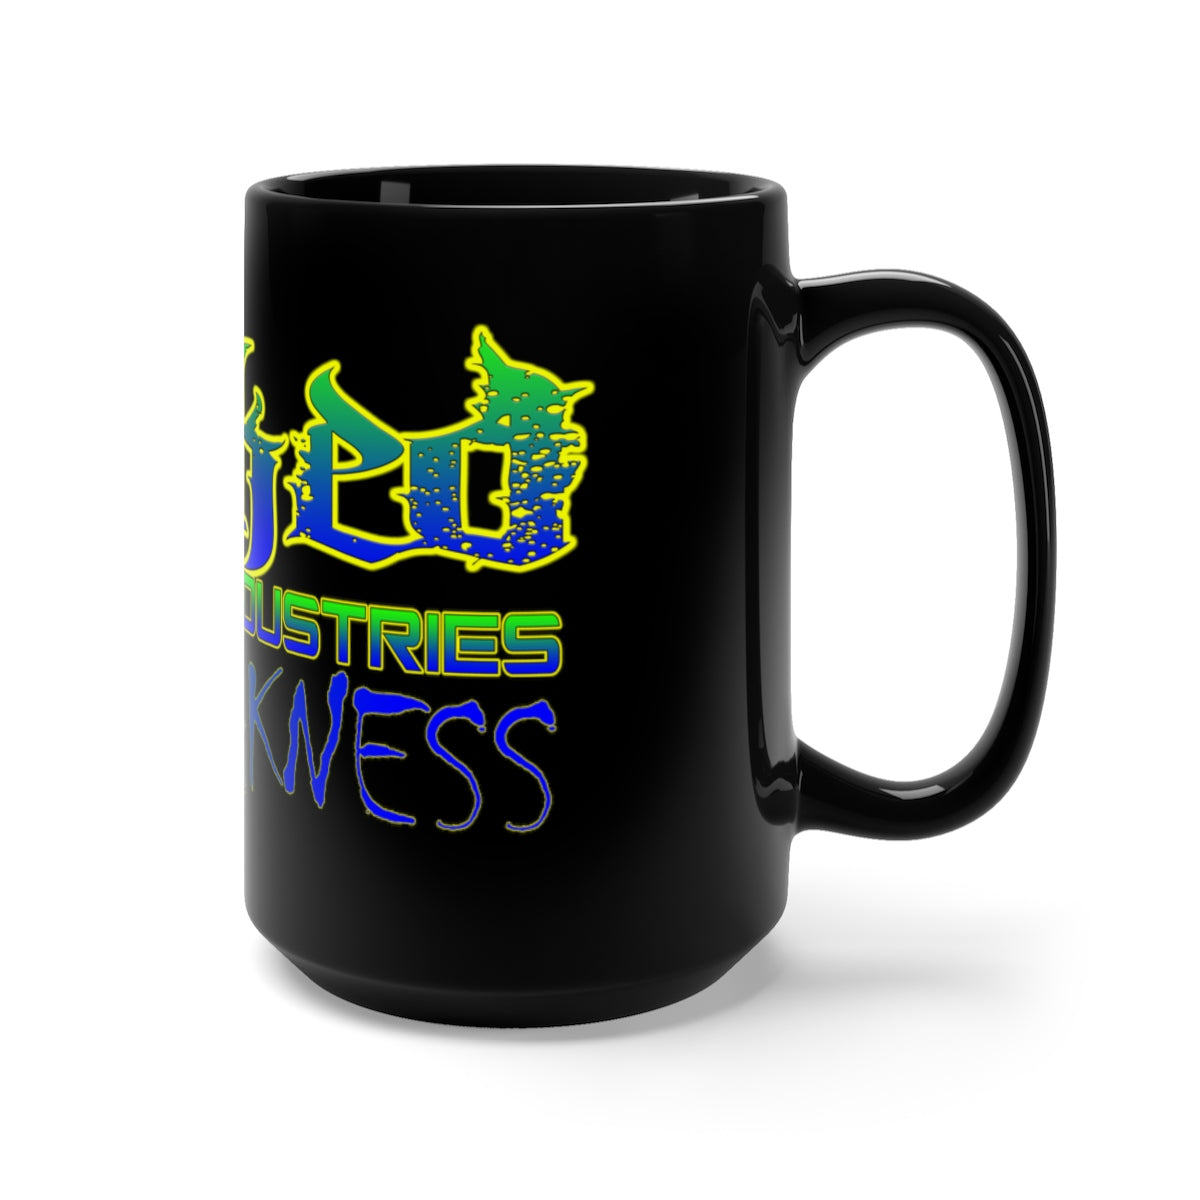 No Weakness Neon Green and Blue /Black Mug 15oz